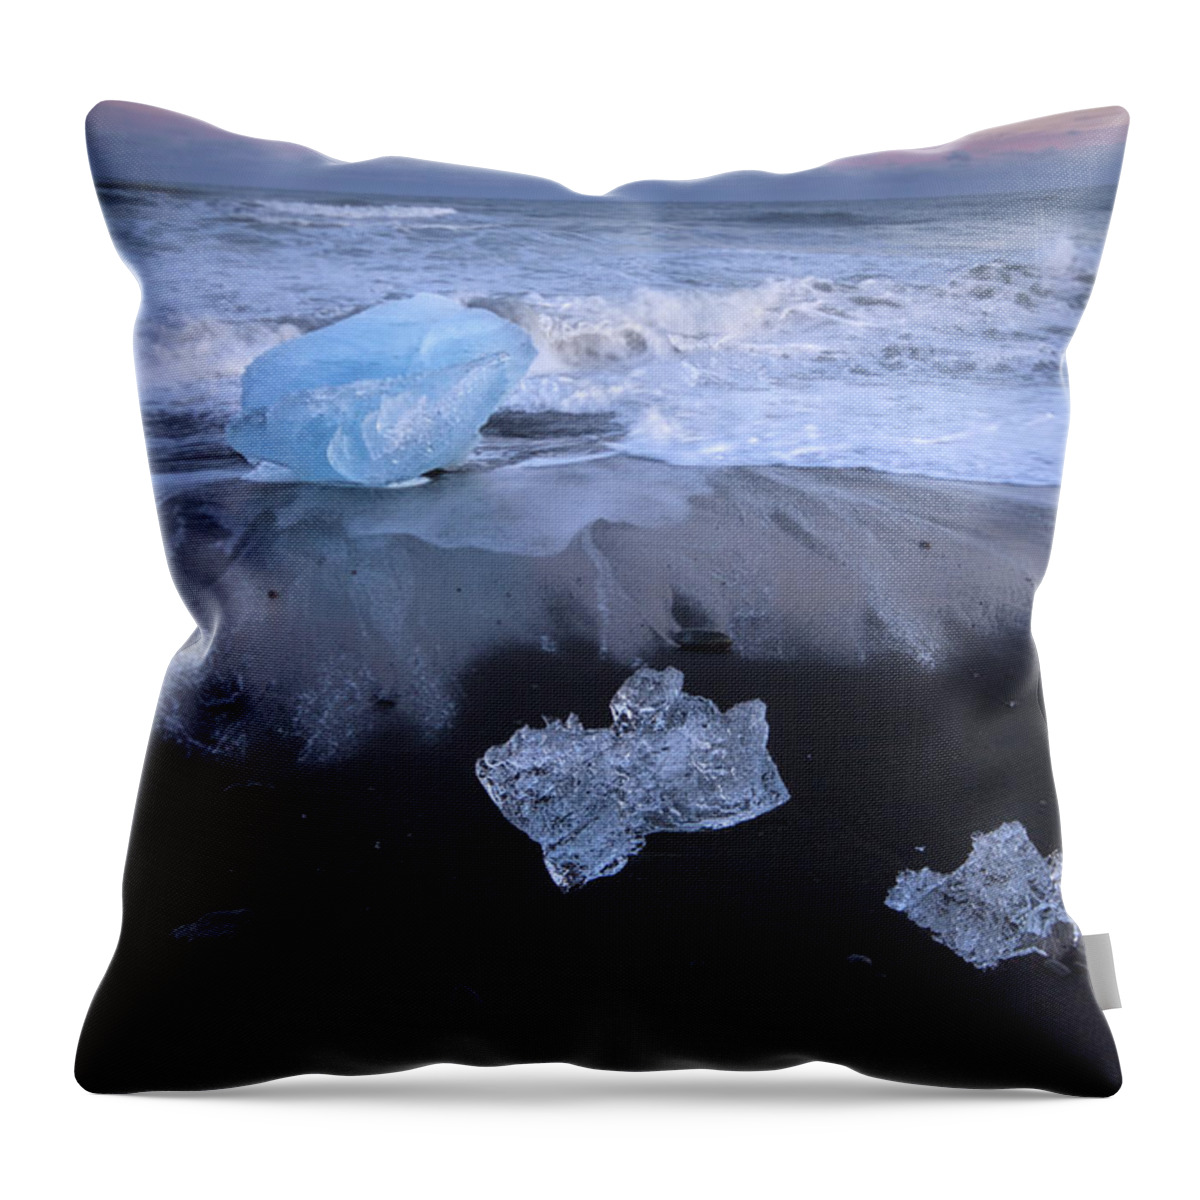 Jokulsarlon Throw Pillow featuring the photograph Jewell Of The Sea by Evelina Kremsdorf